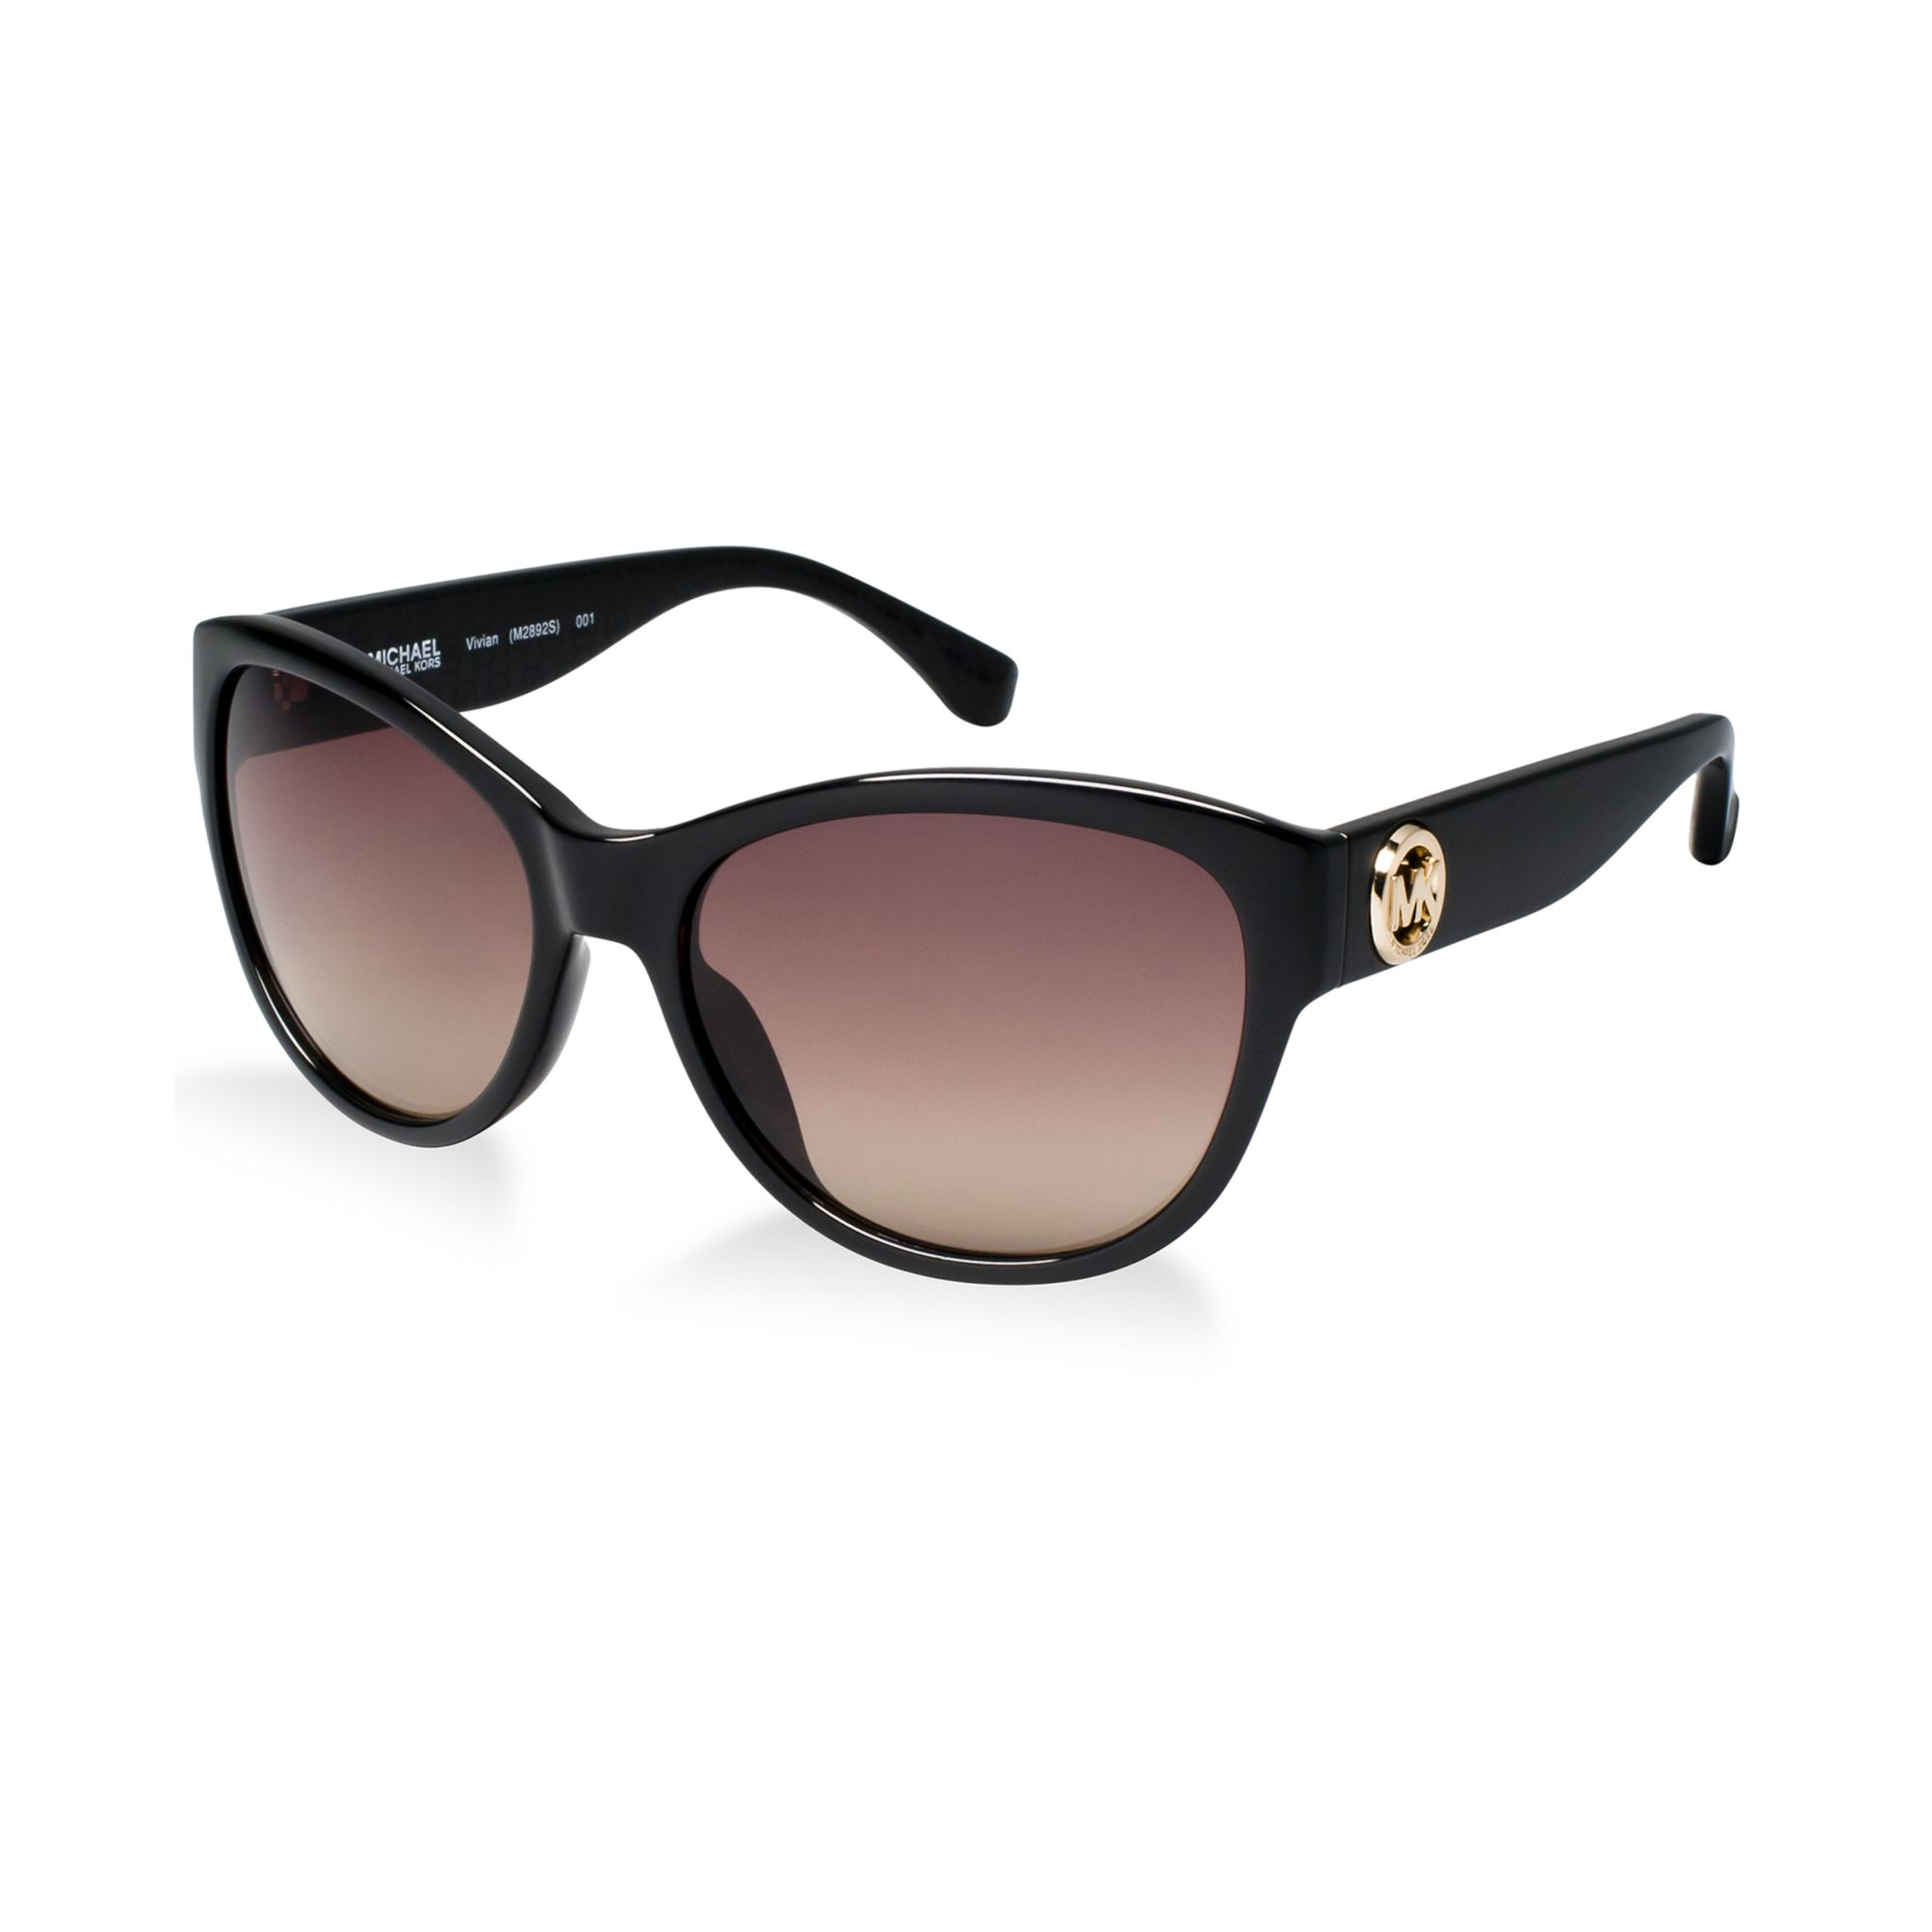 Michael Kors sunglasses in Black (Black/Brown Gradient) | Lyst